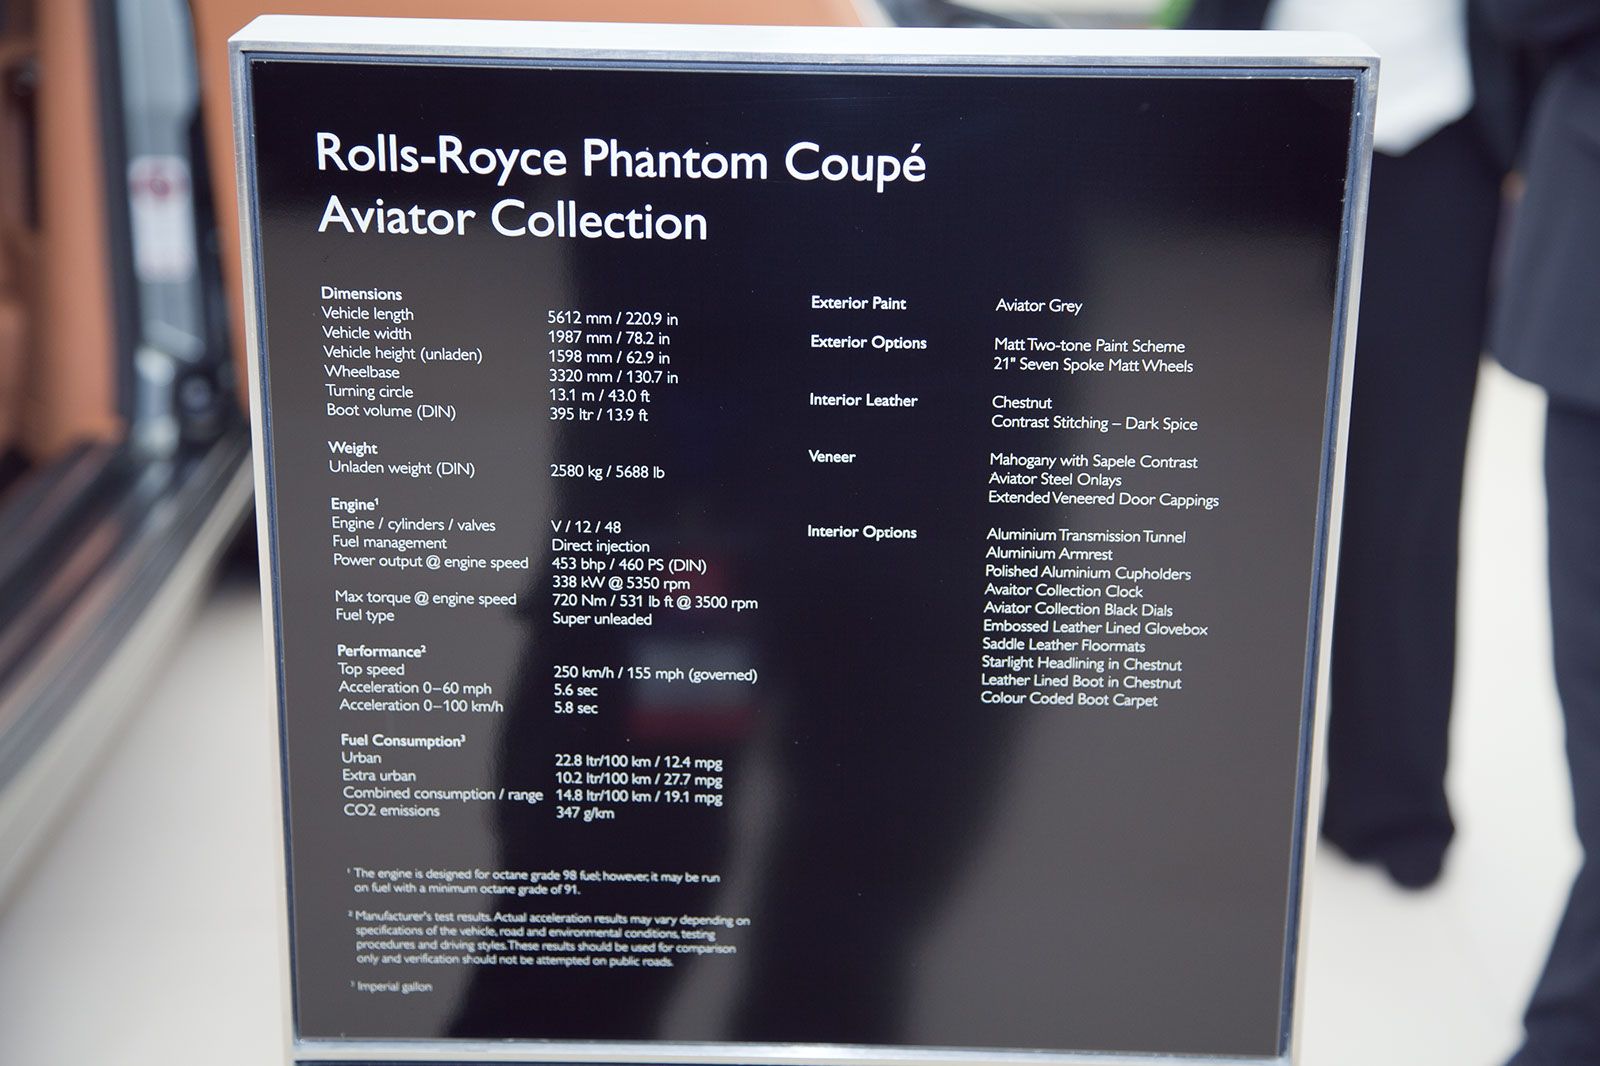 2013 Rolls-Royce Phantom Coupé Aviator Edition